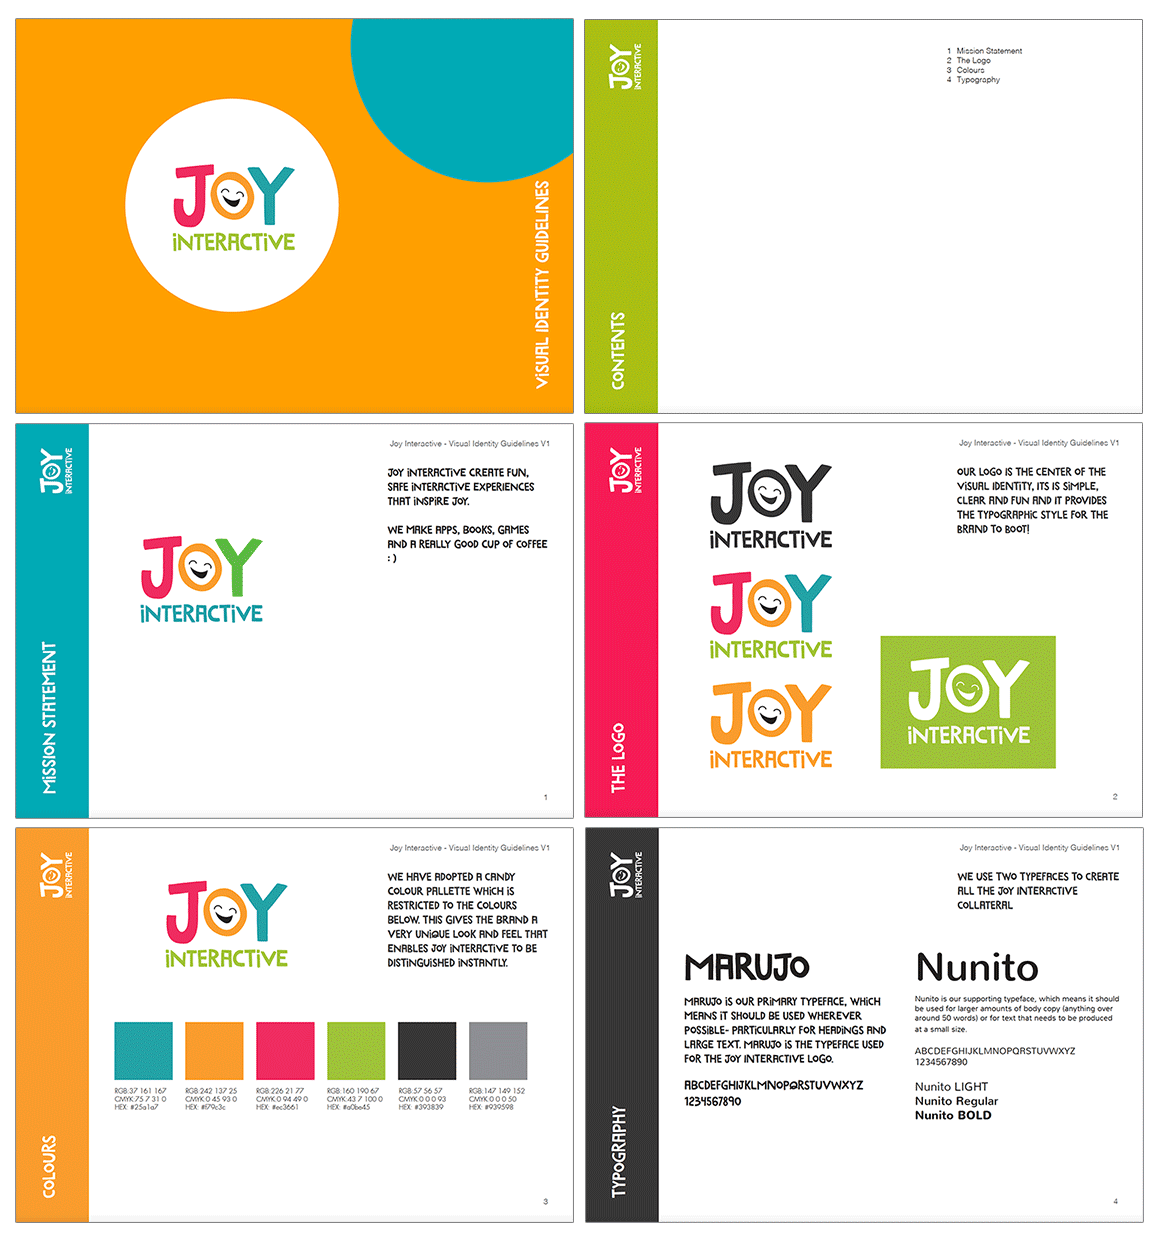 work-joy-brand2